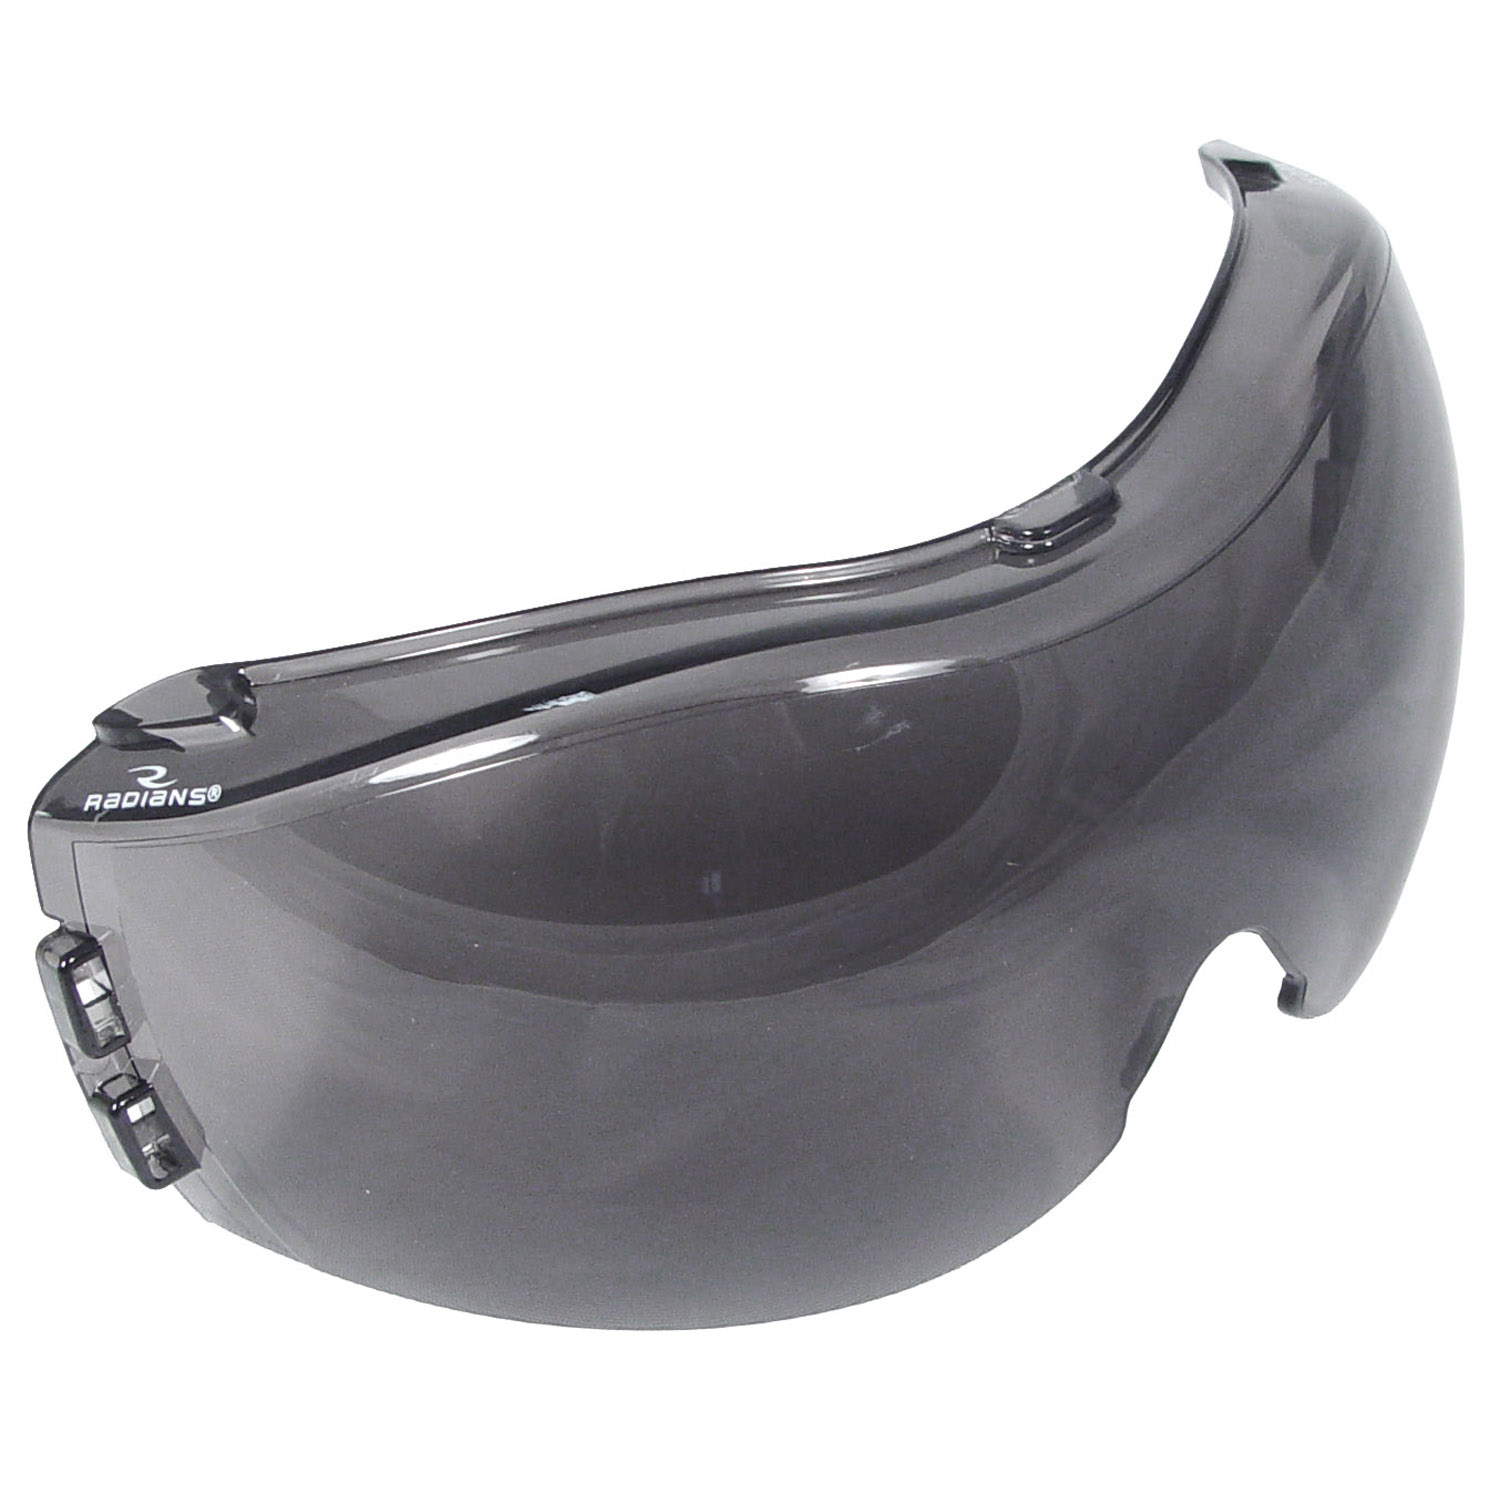 Cloak™ Dual Mold Goggle Replacement Lens - Smoke Anti-Fog Lens